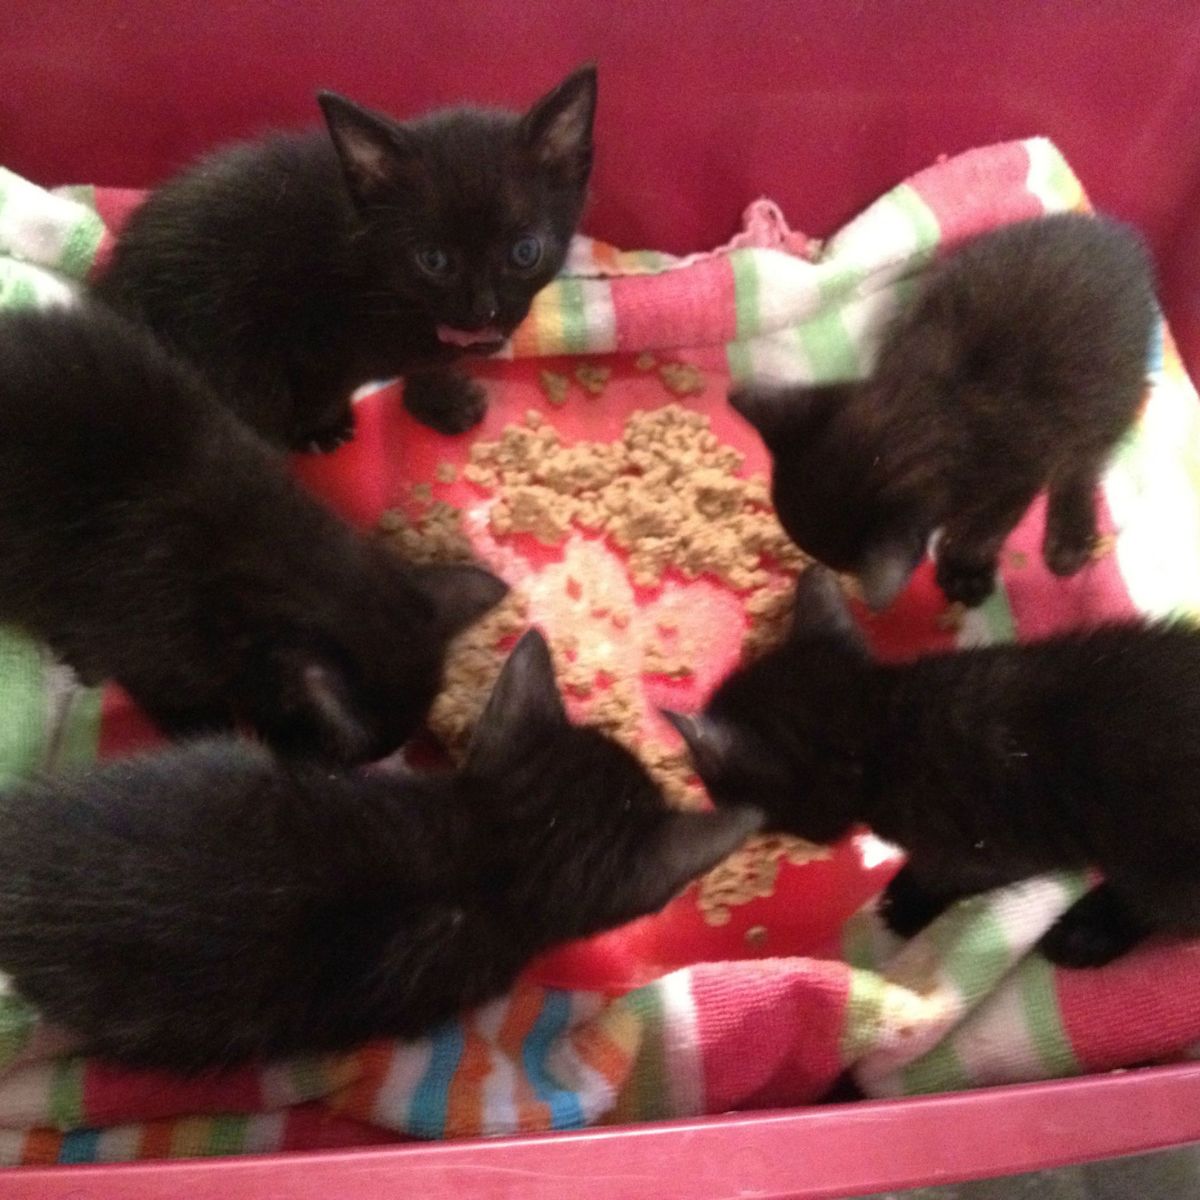 black kittens eating a food